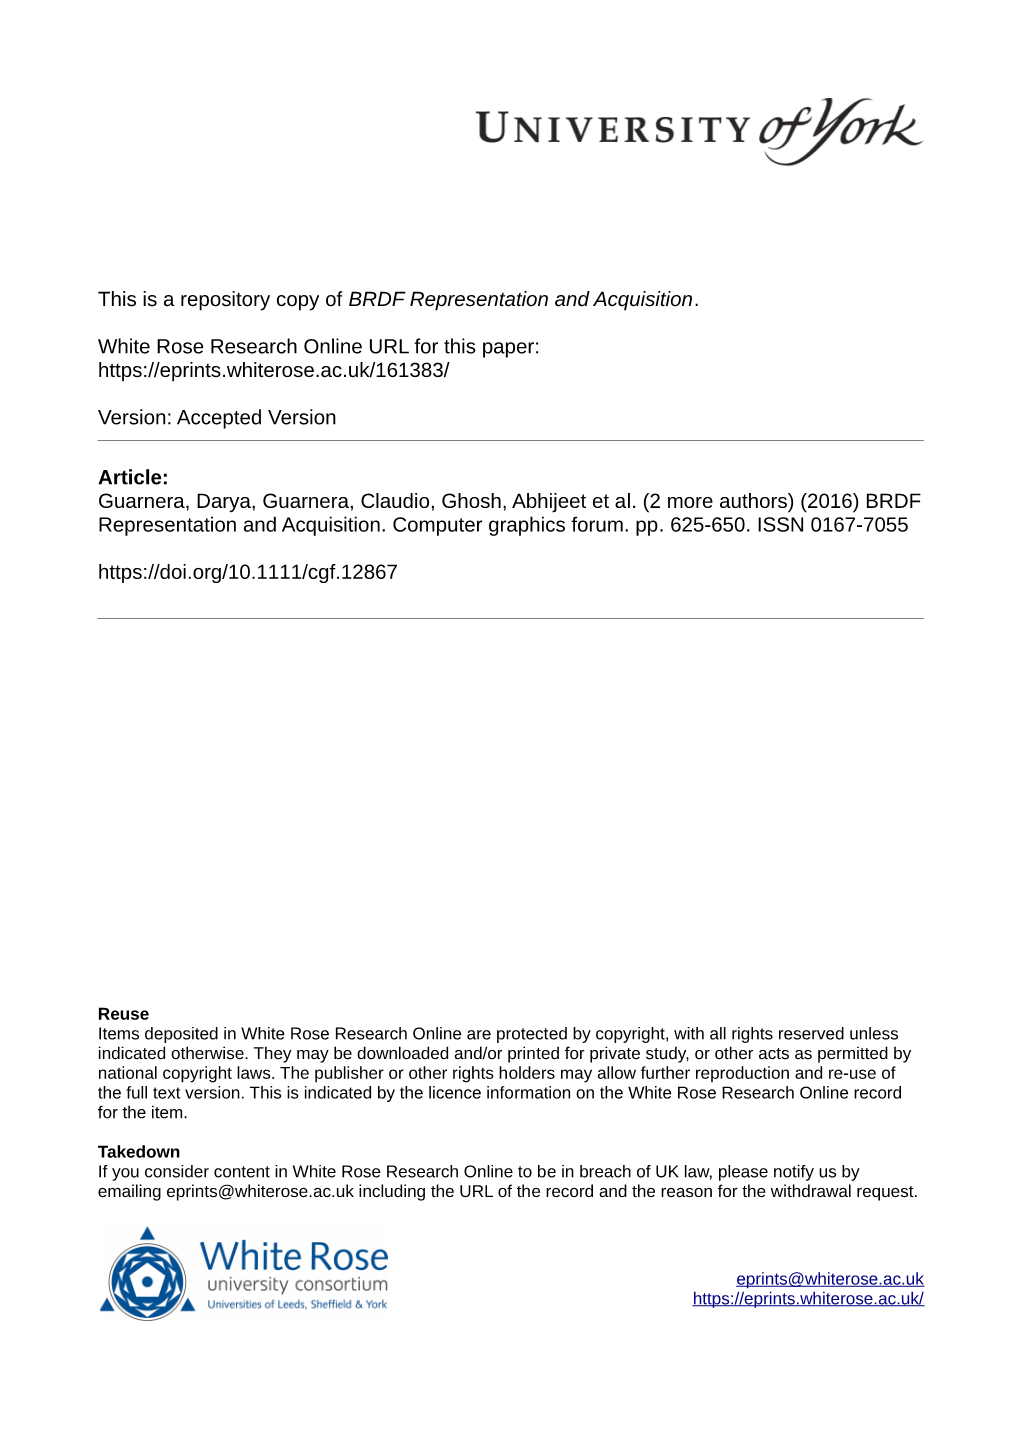 BRDF Representation and Acquisition